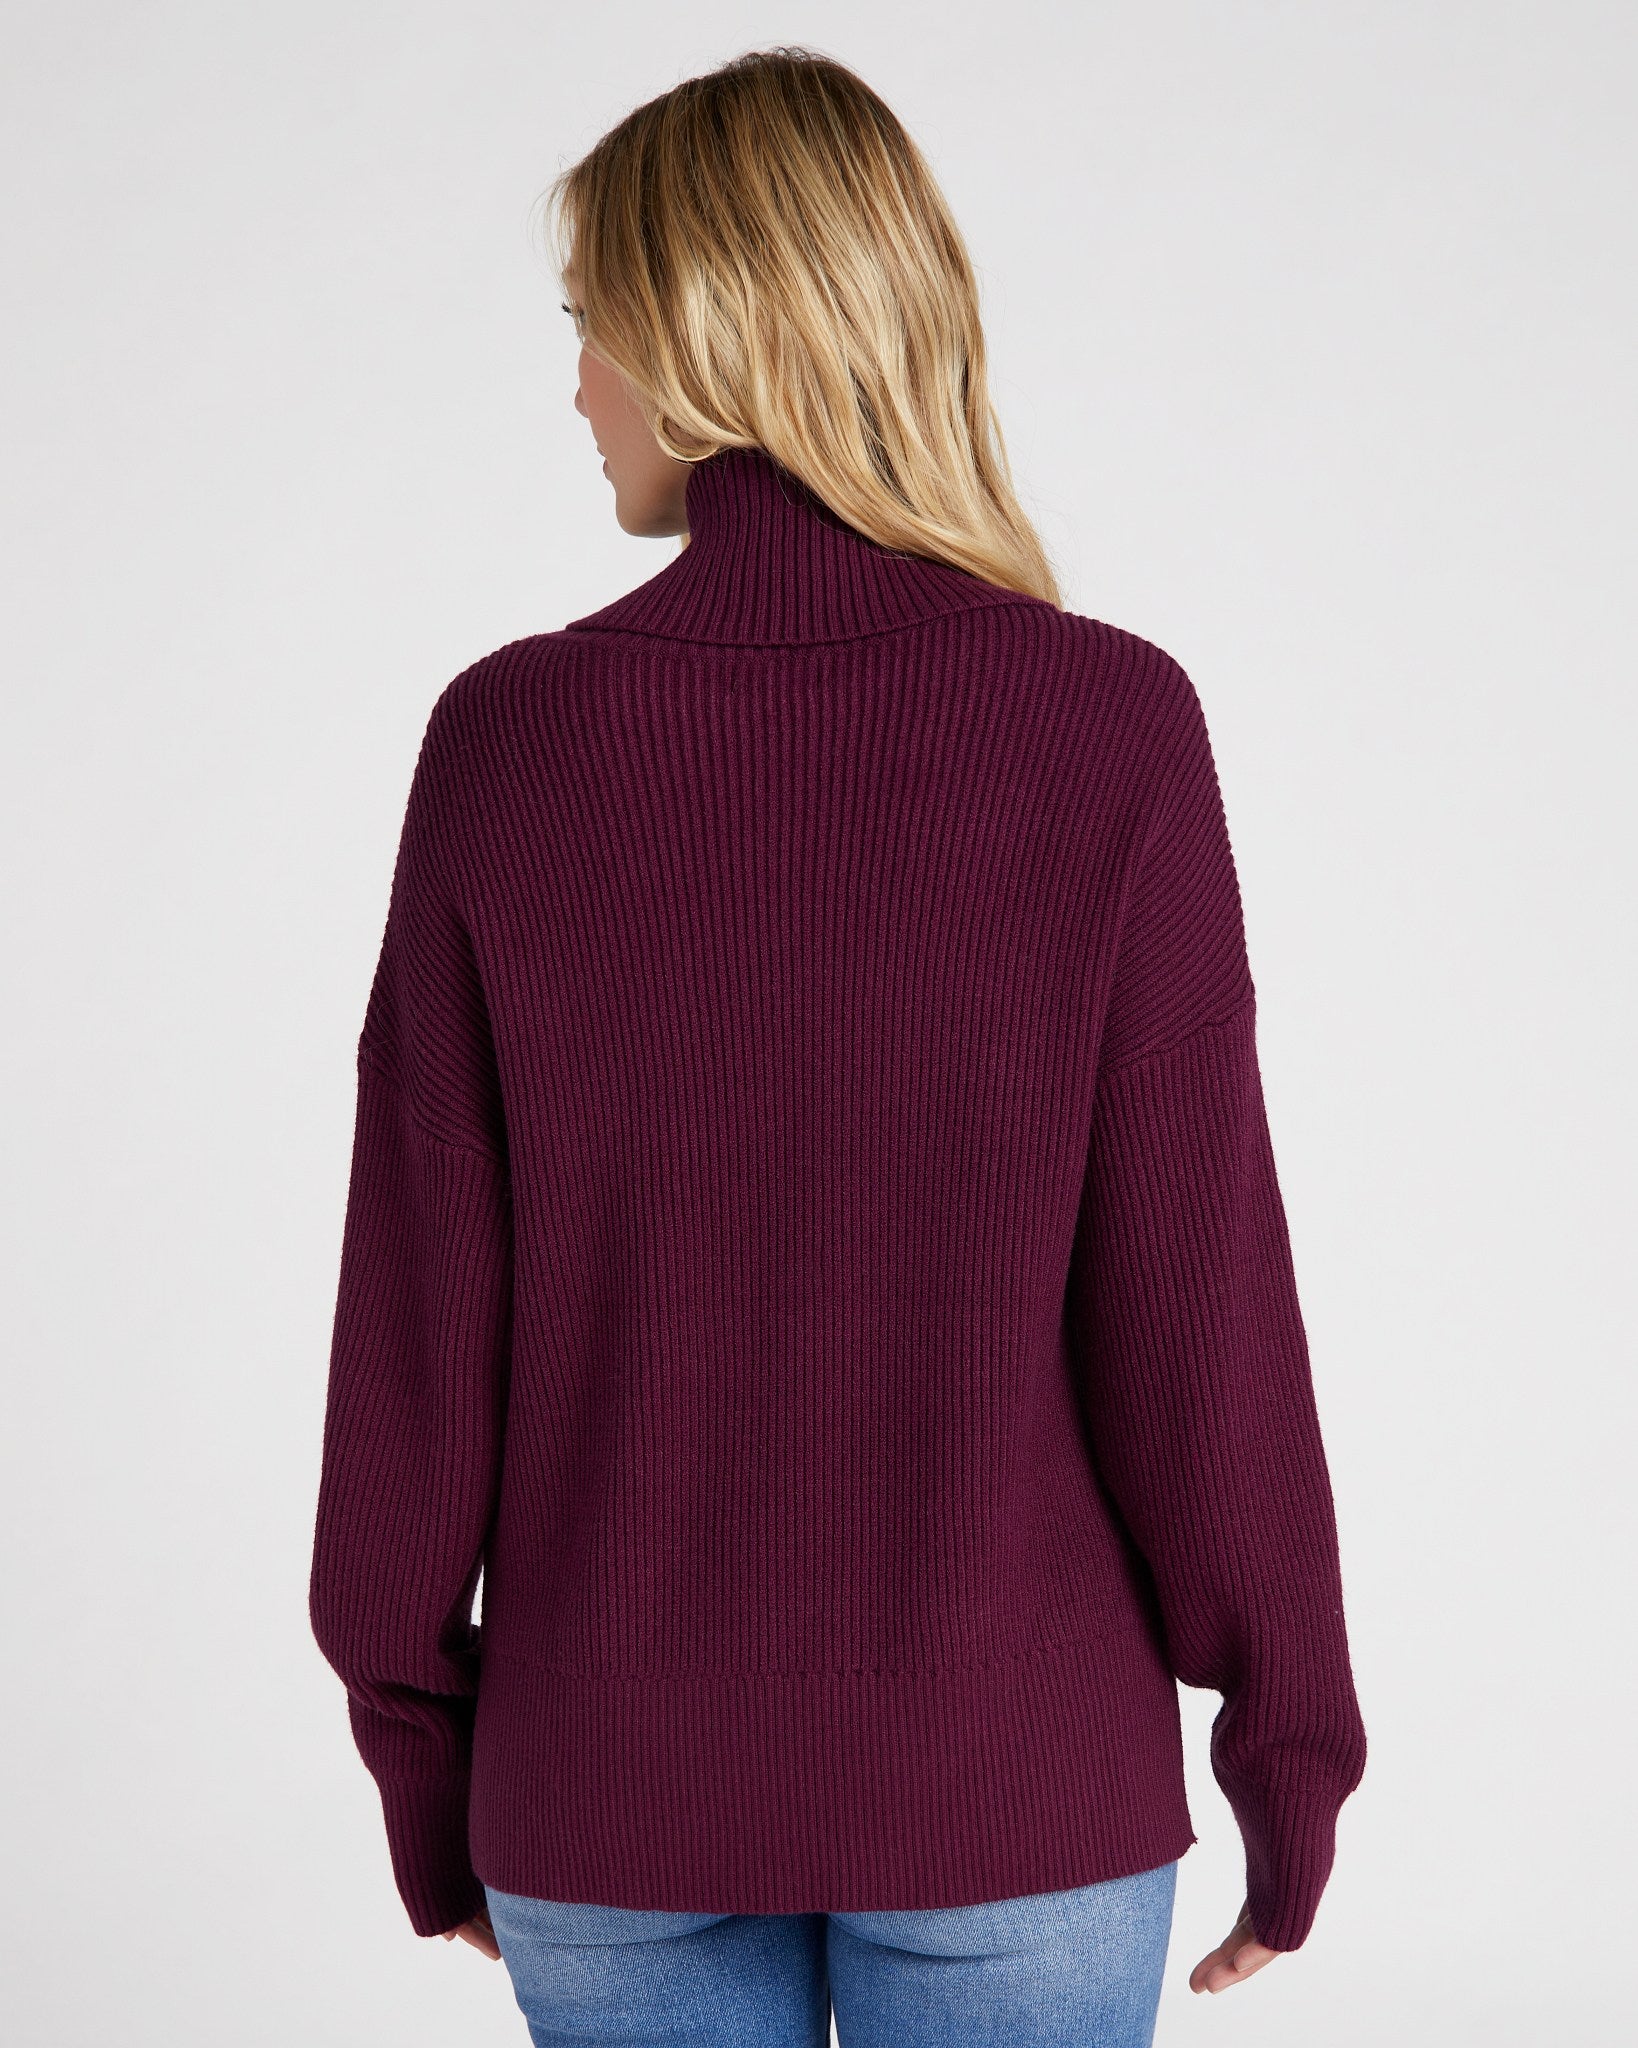 Elena Sweater by Thread & Supply - Bronzy Olive